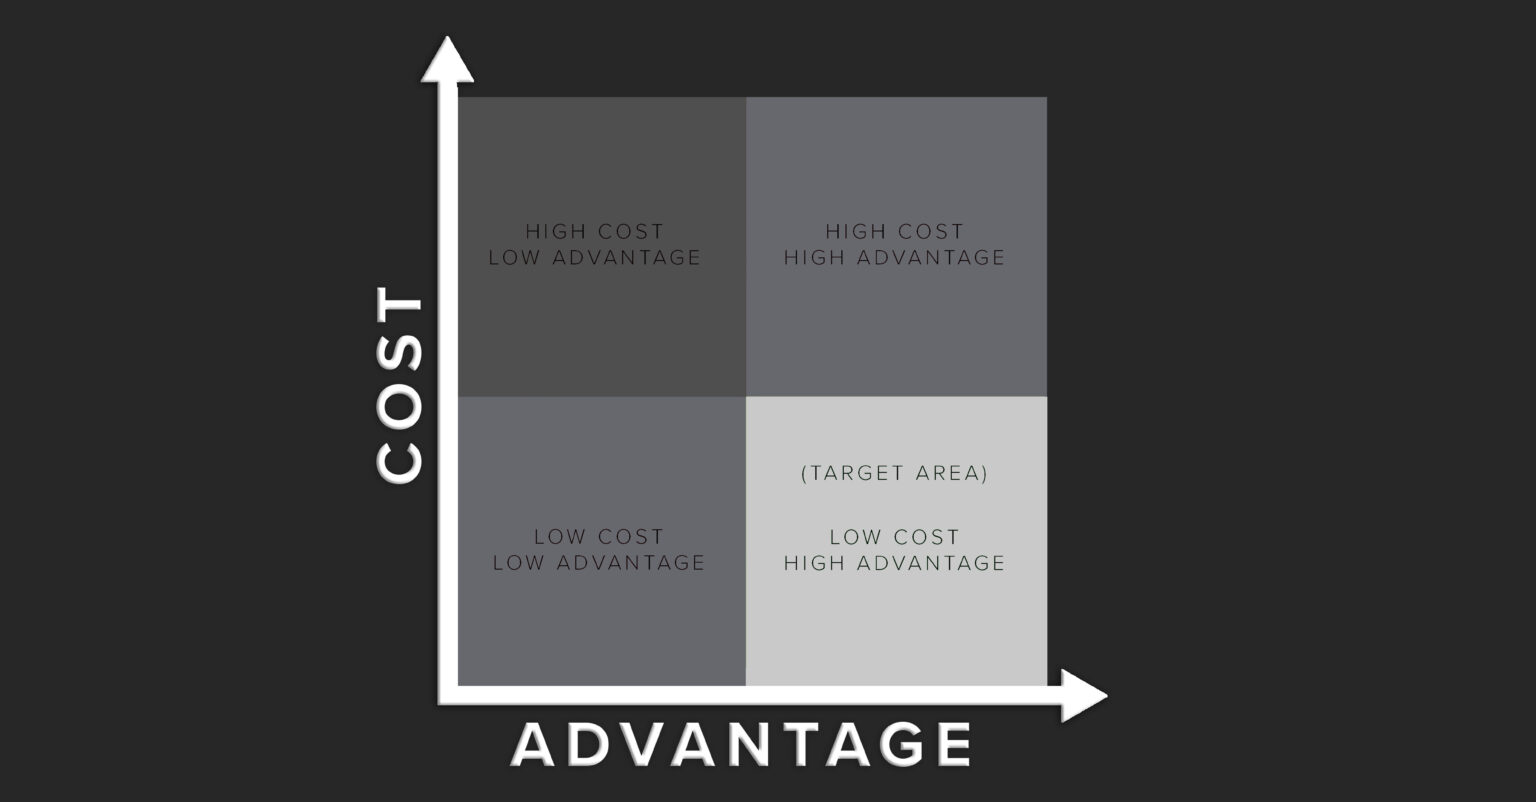 Cost vs. advantage analysis